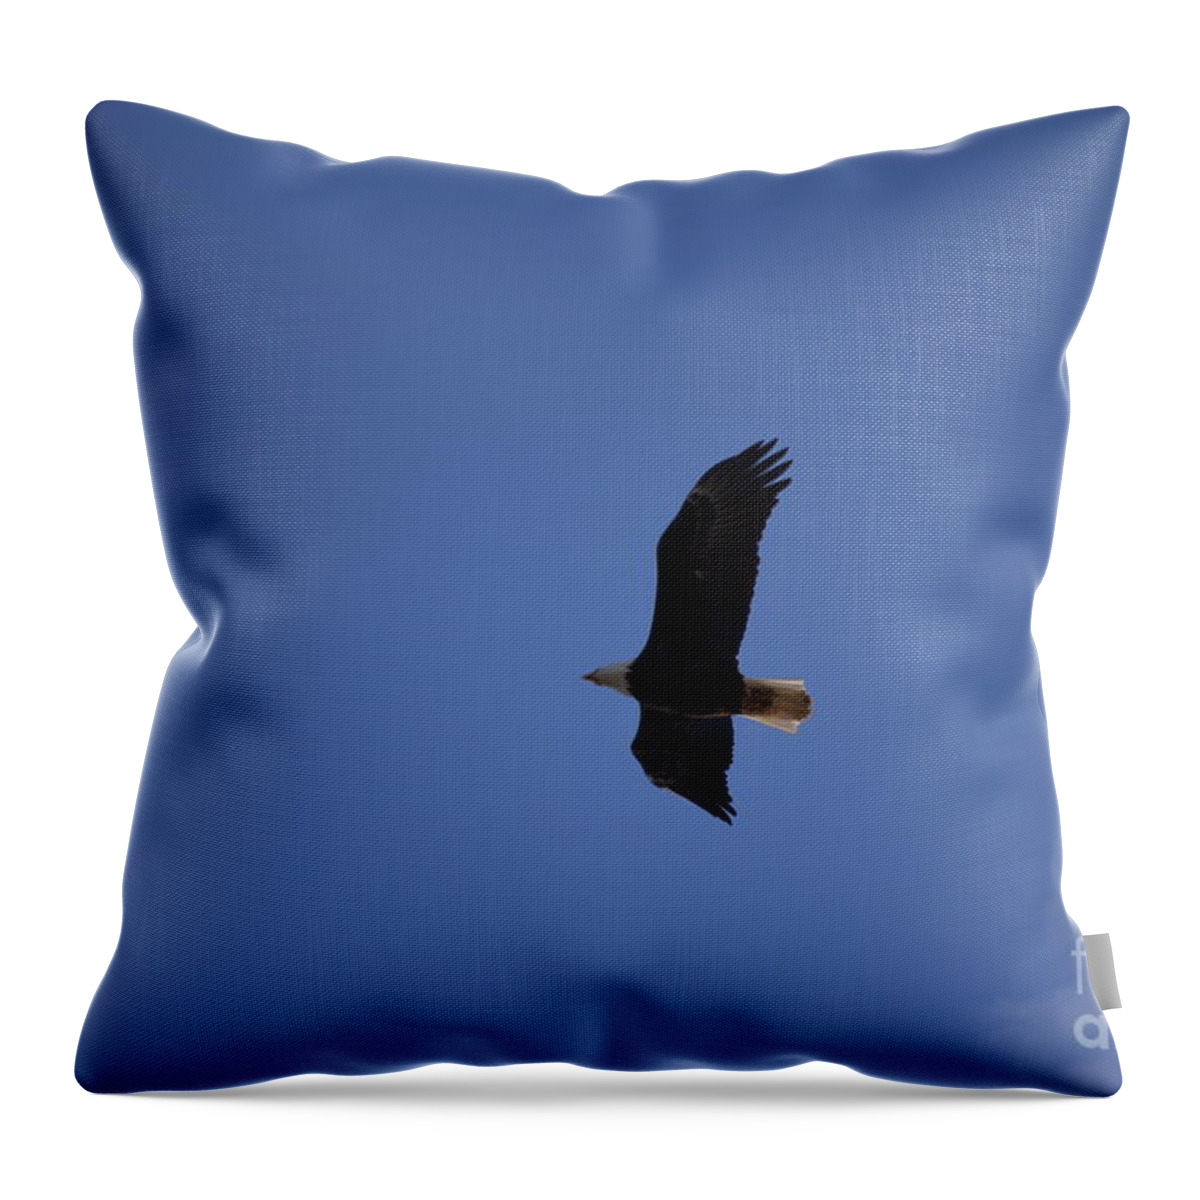 Bird Throw Pillow featuring the photograph Eagle 1 by Tamara Michael